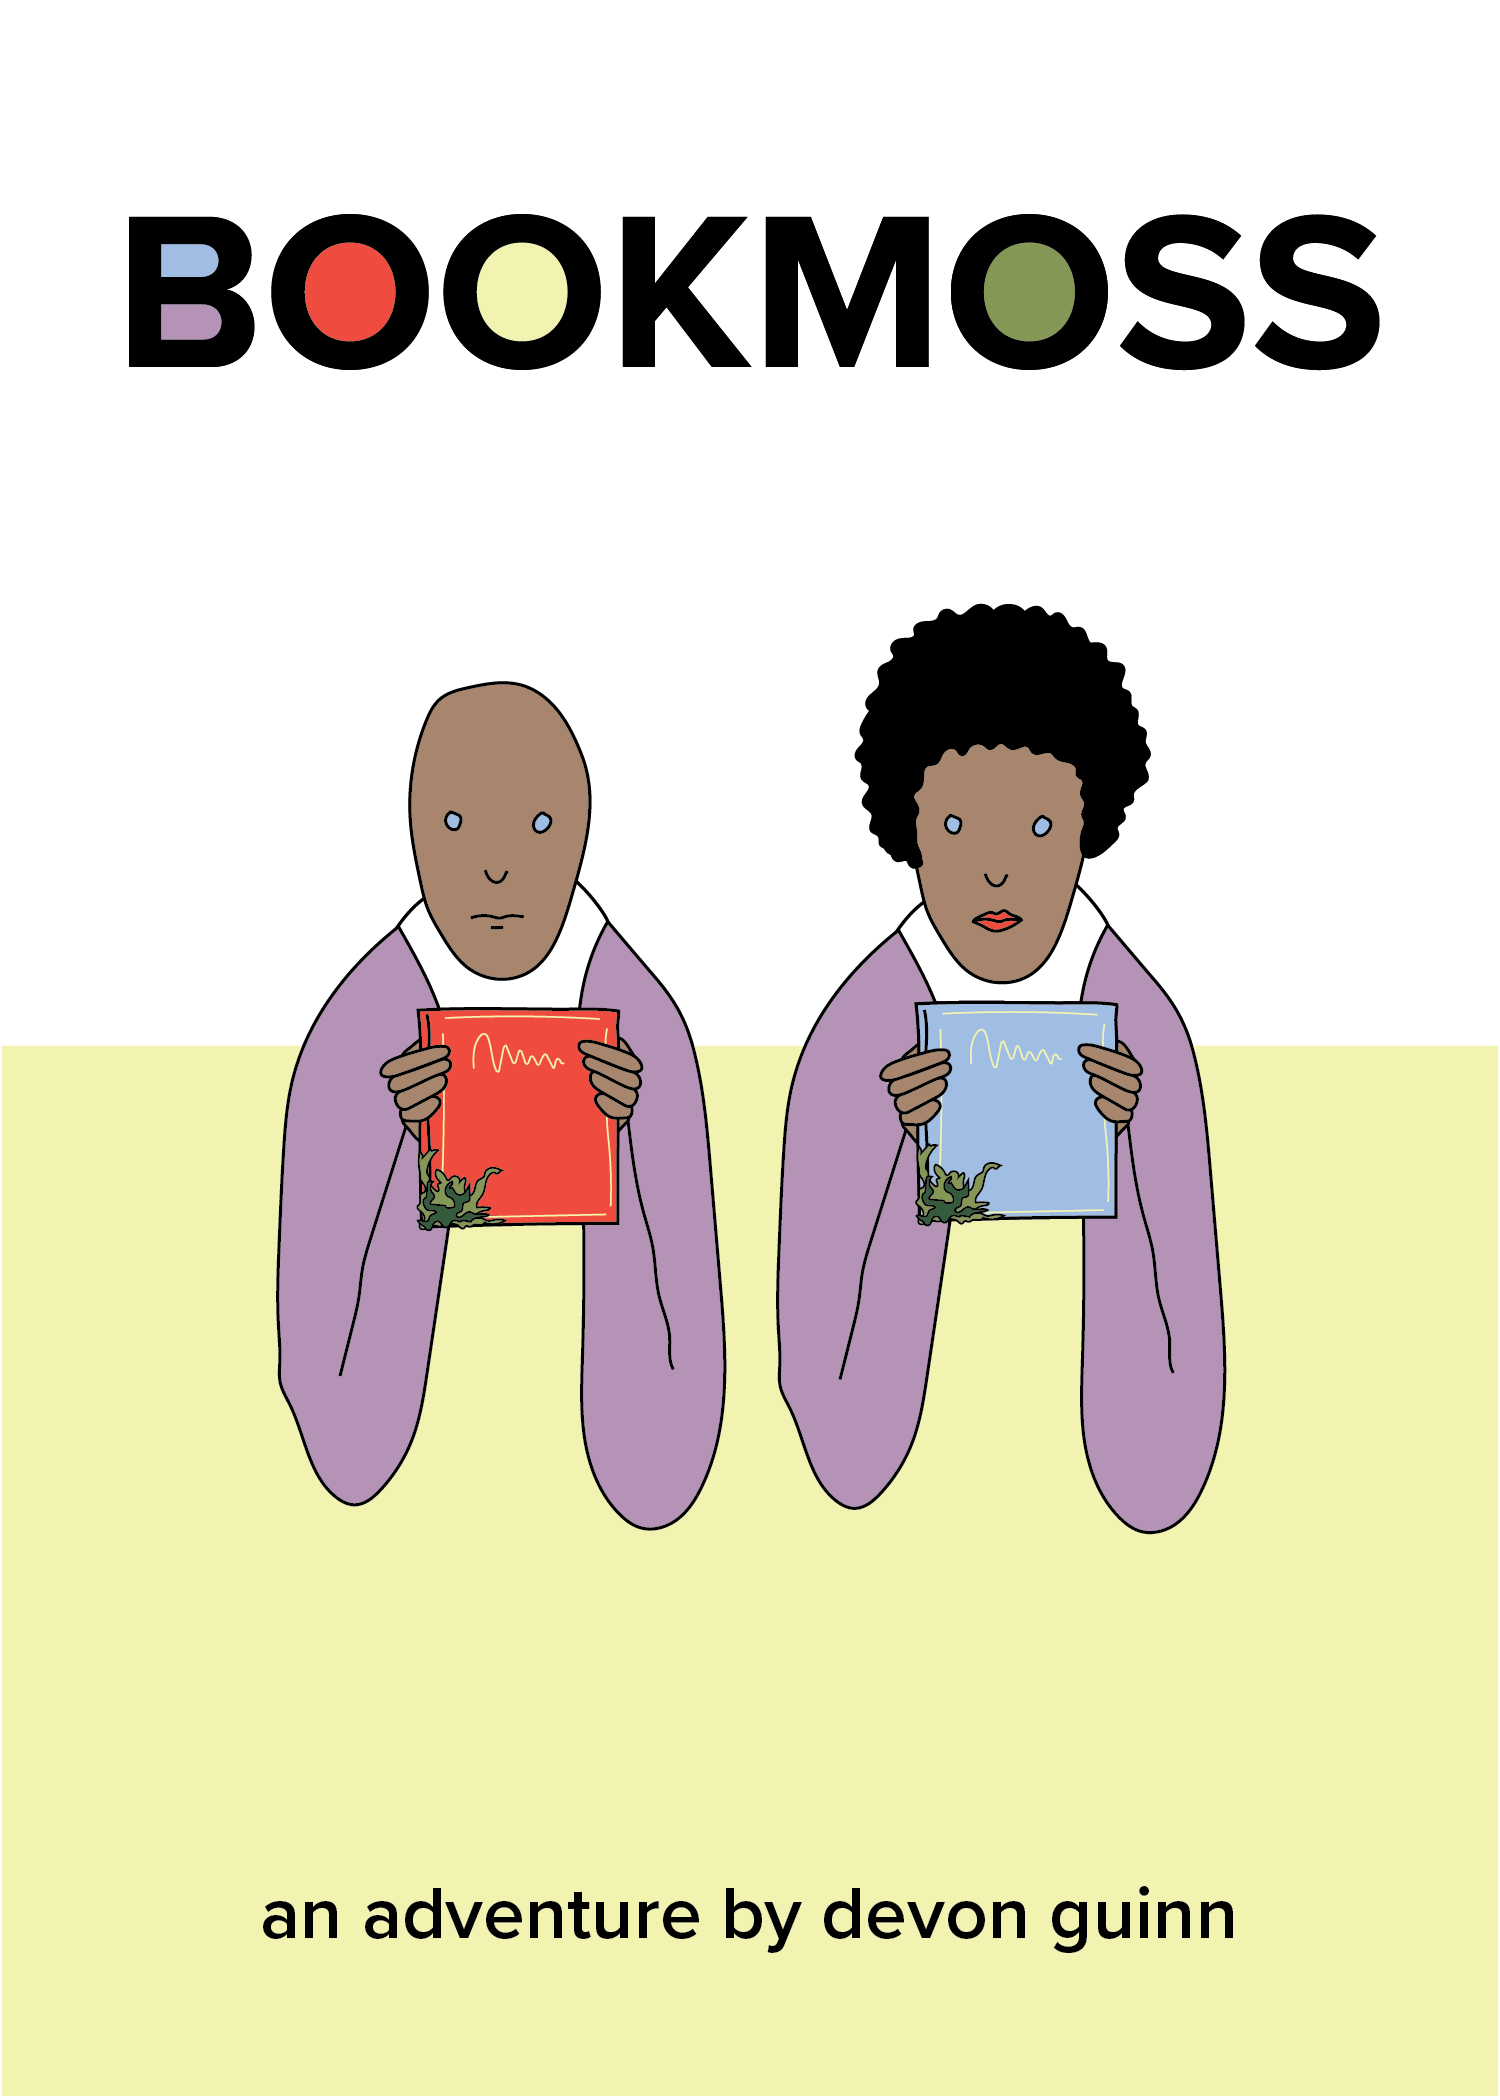 Cover art for Bookmoss